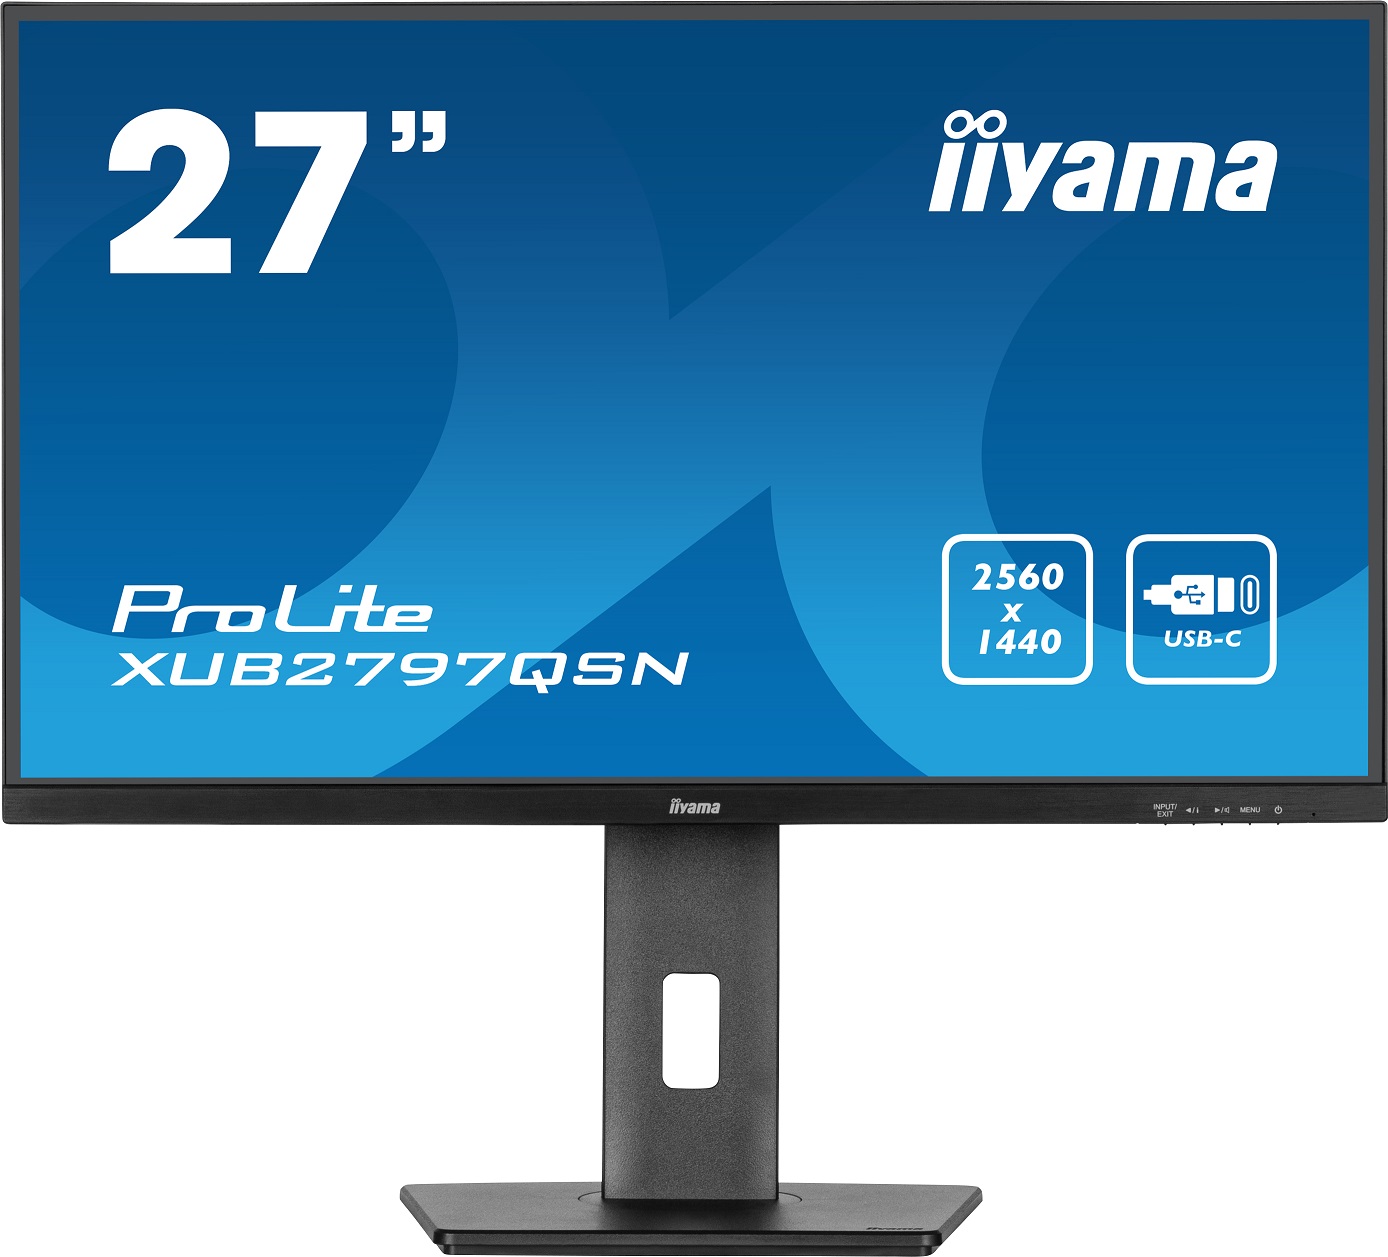 Iiyama 27" XUB2797QSN-B1, IPS,QHD,USB-C,RJ45,HAS